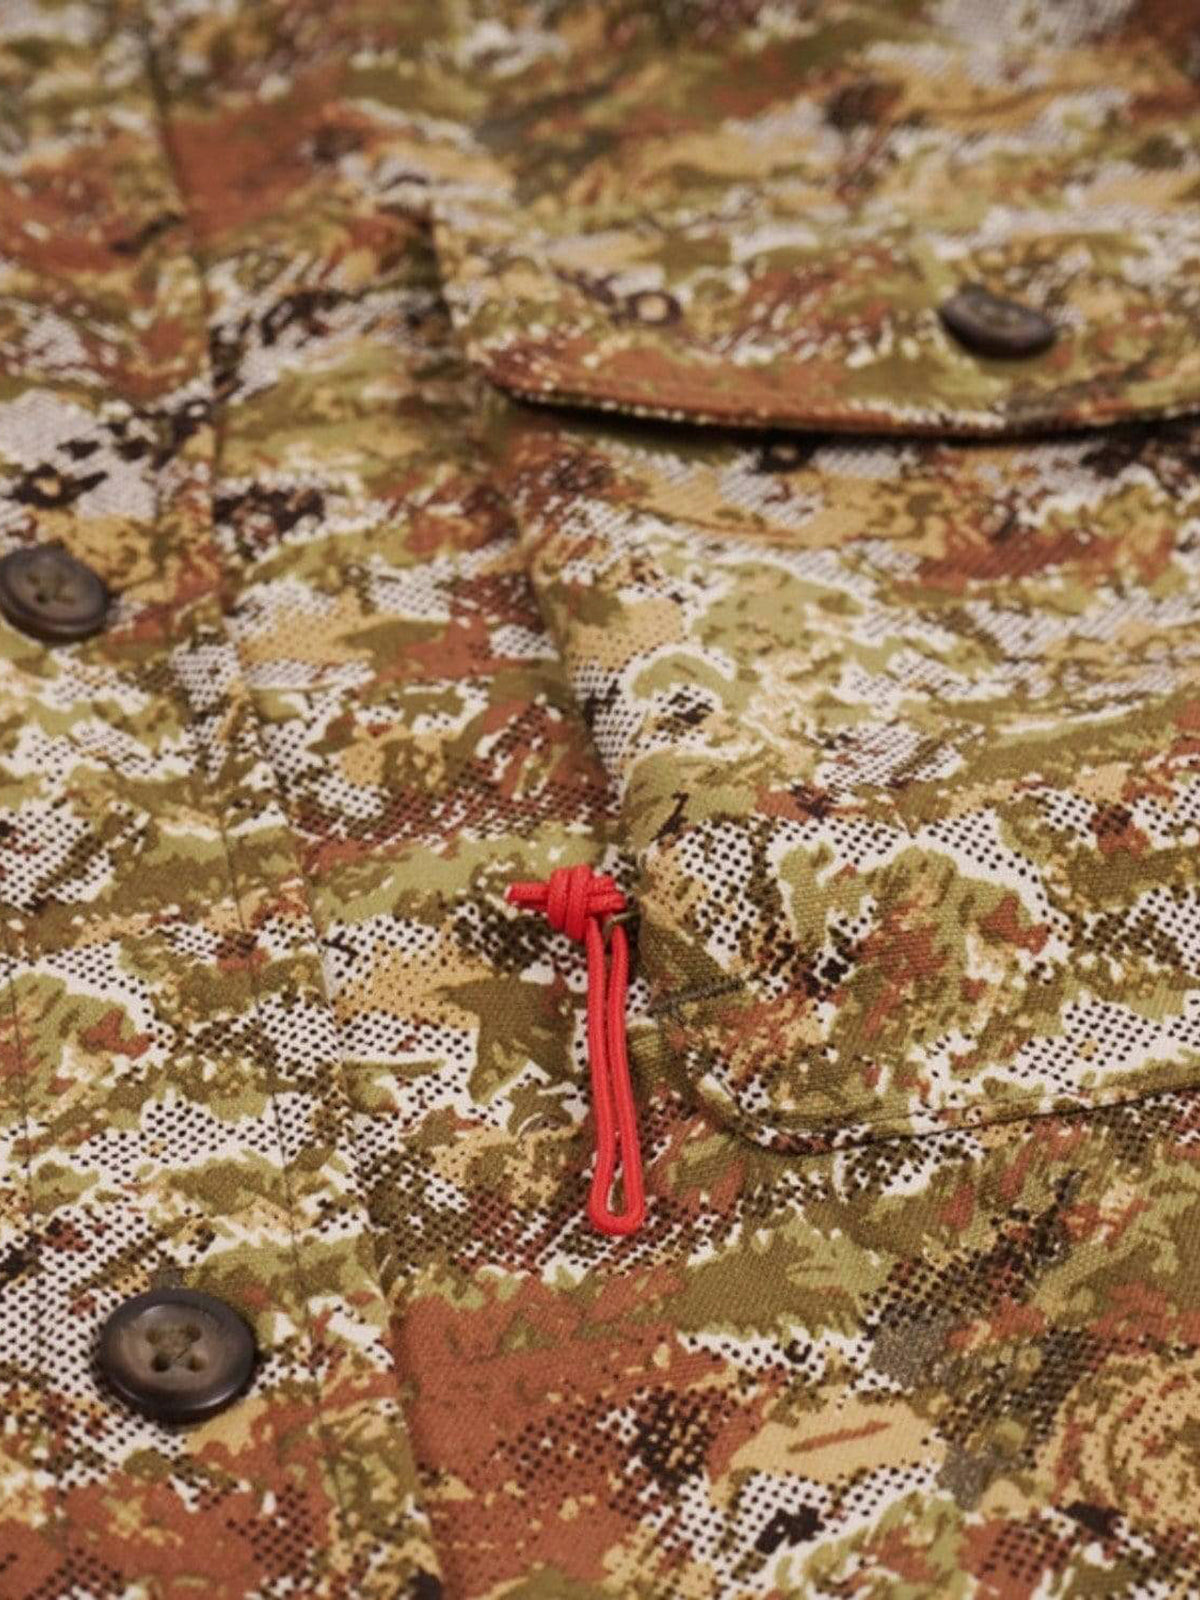 Lightweight Hunting Shirt Long Sleeve - Midland